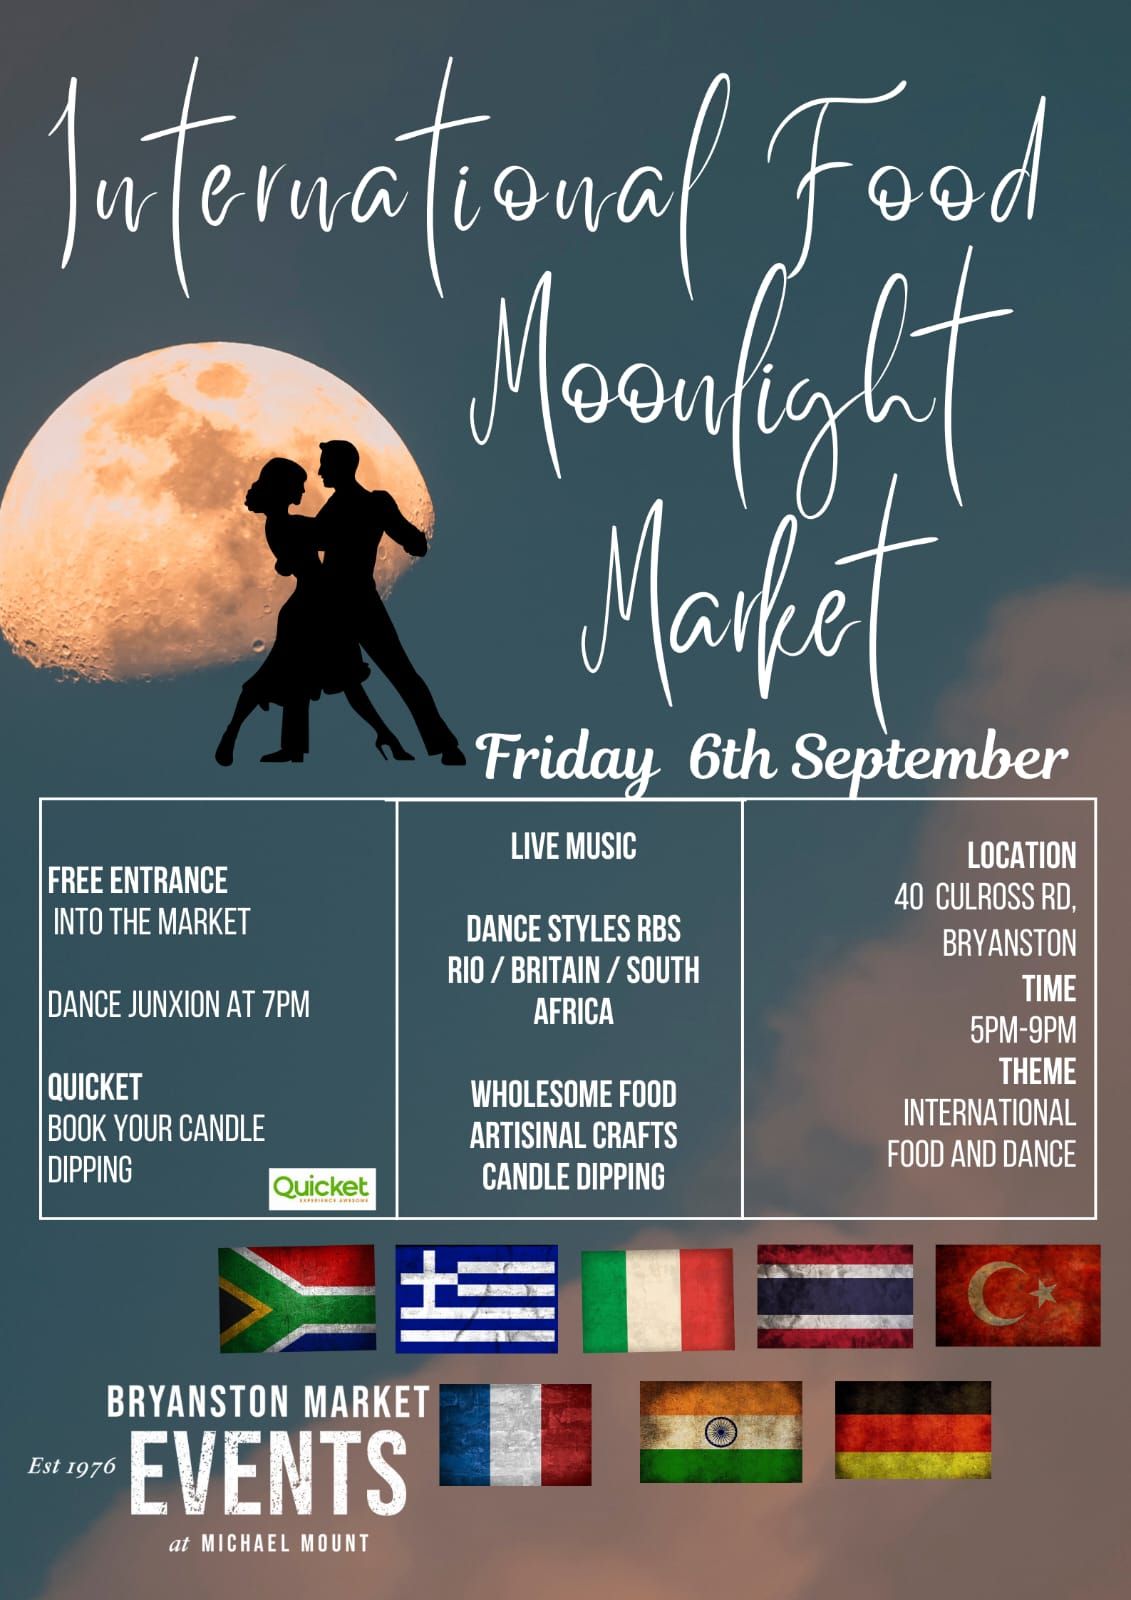 International Food & Dance Moonlight Market